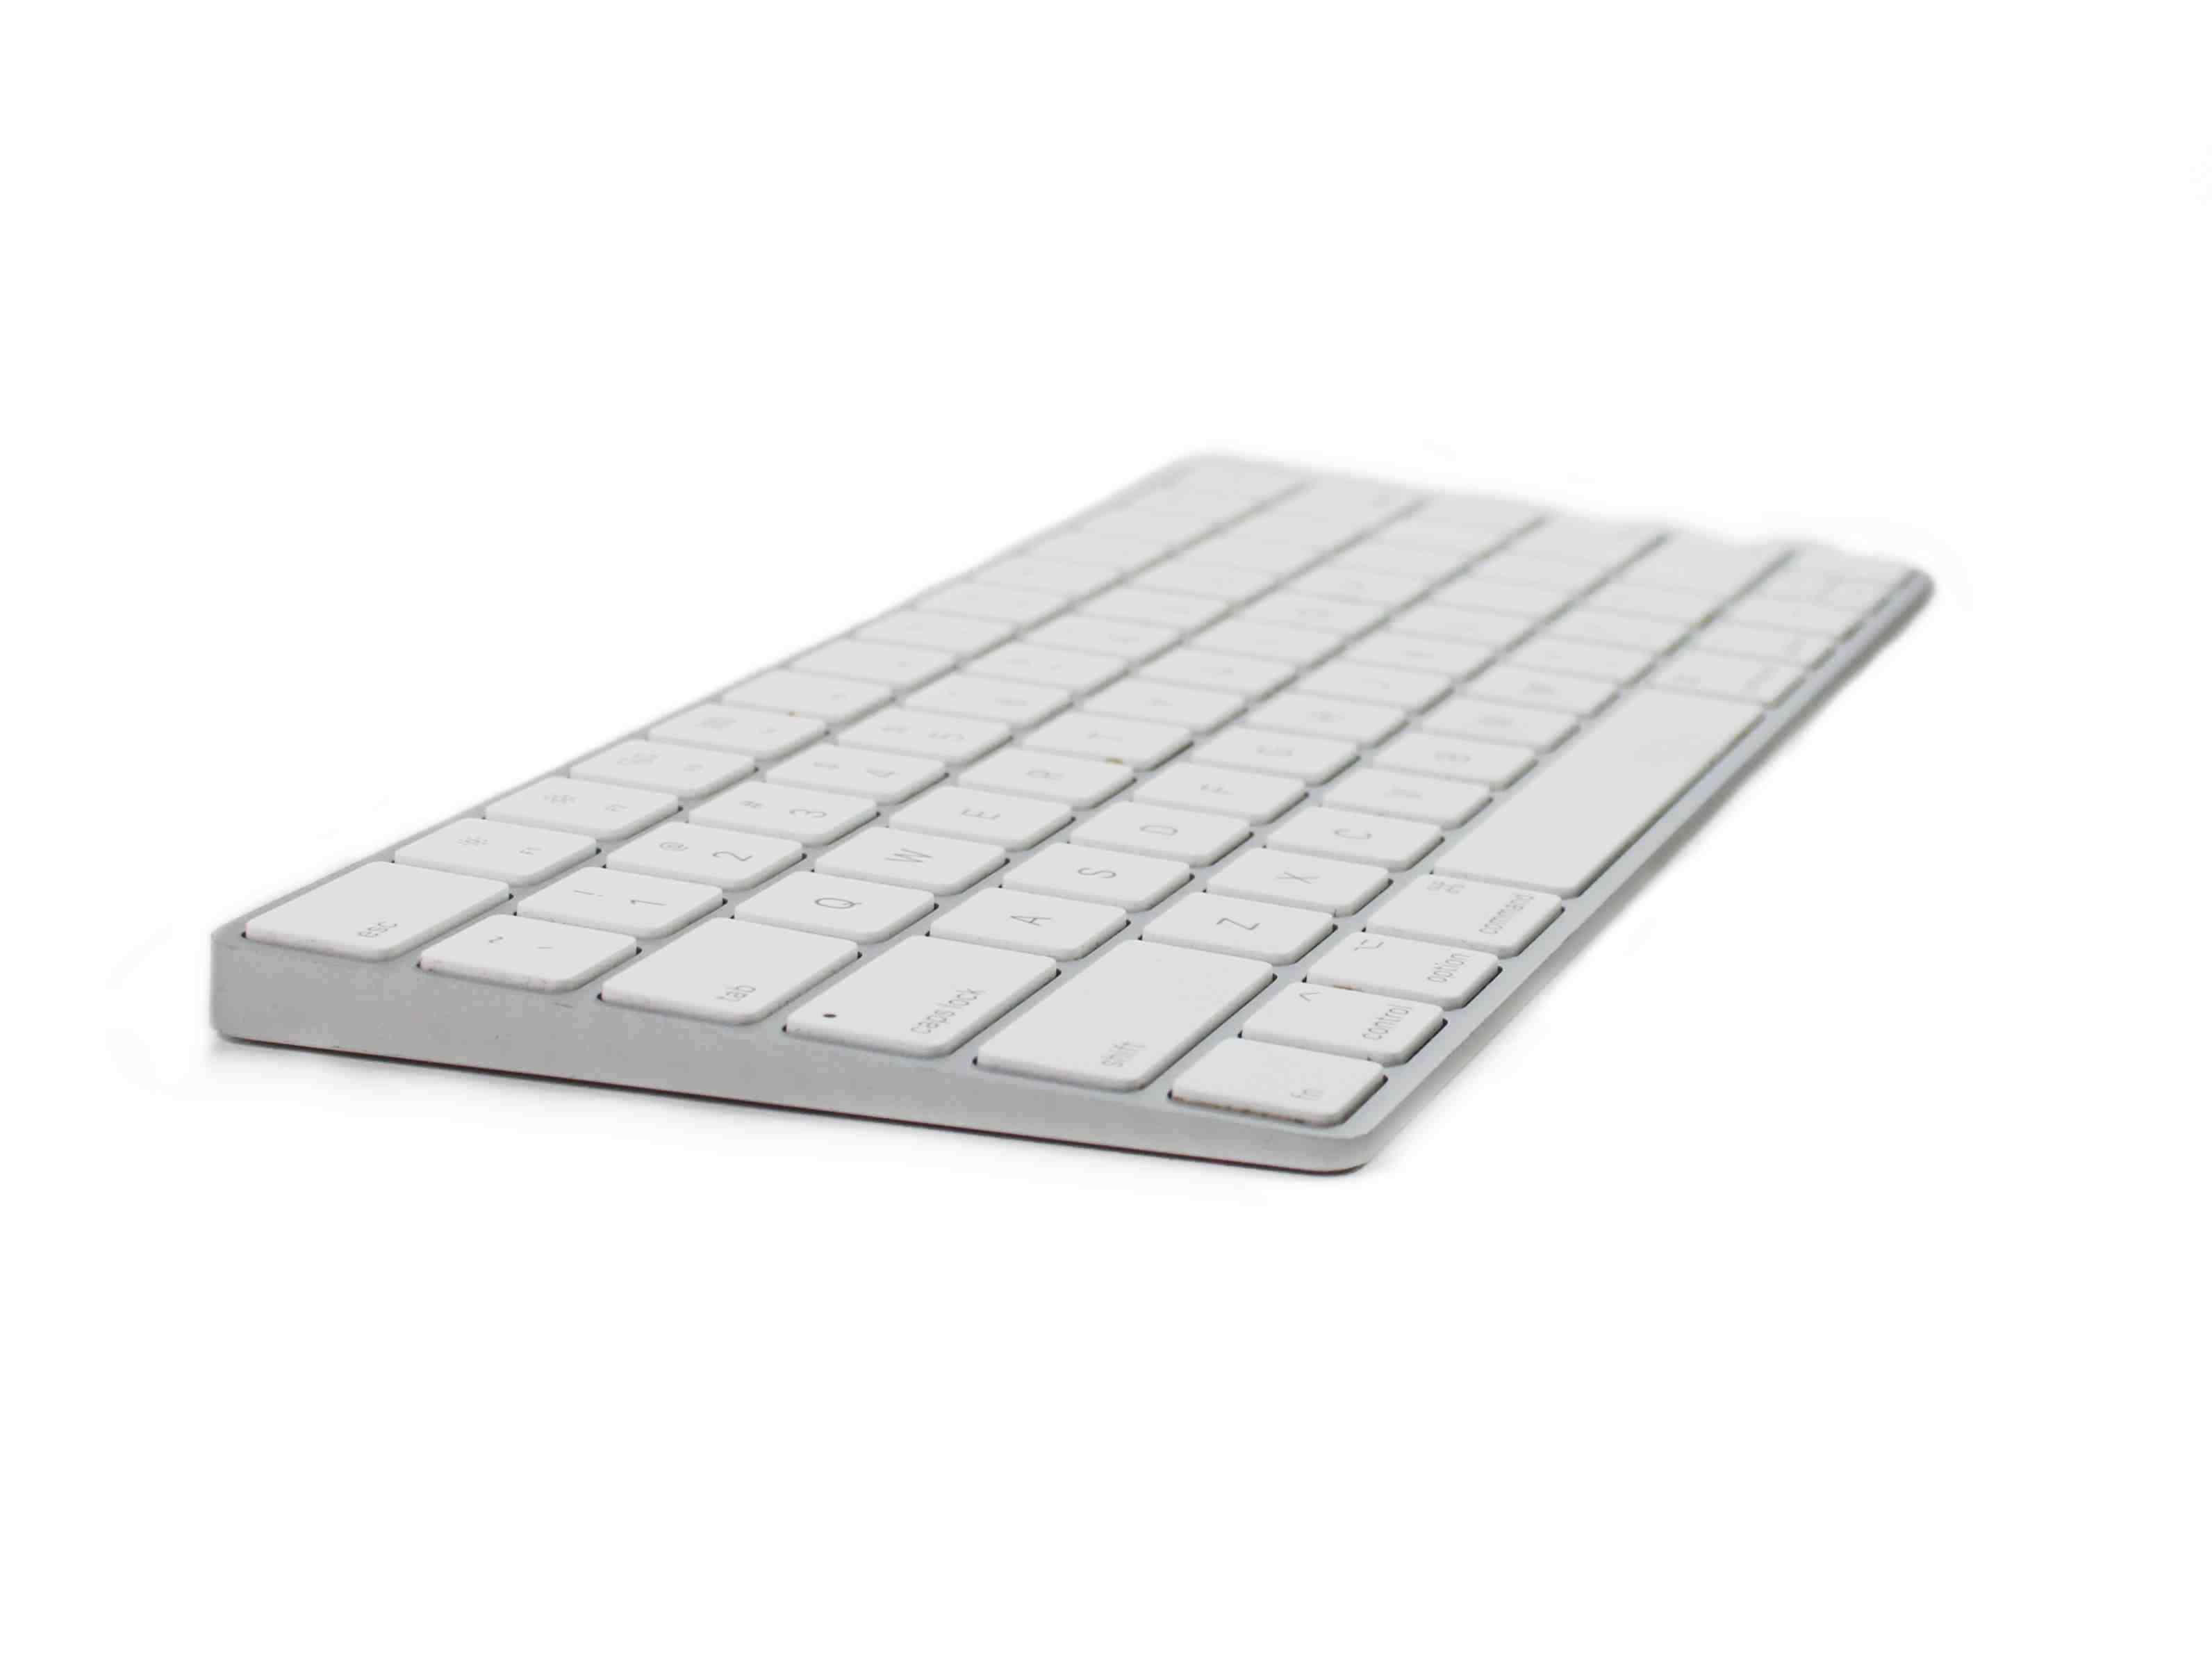 Apple A1644 Wireless Magic Keyboard 2 Silver